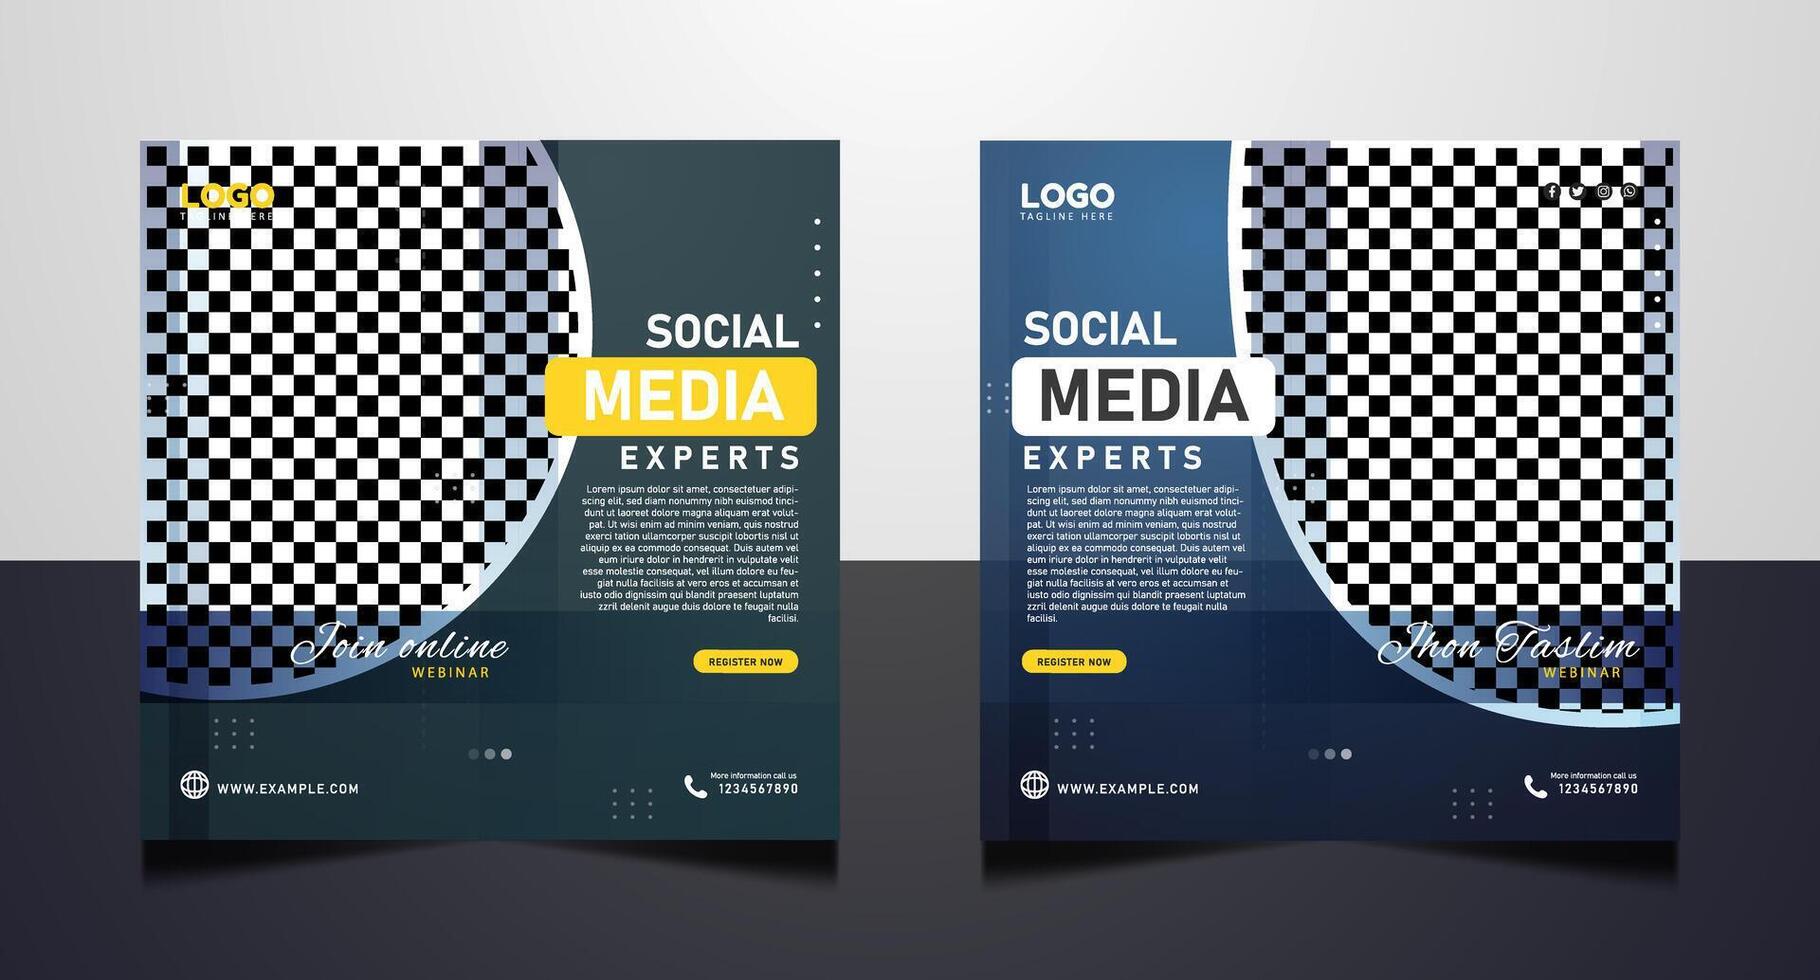 Social media expert banner template design vector